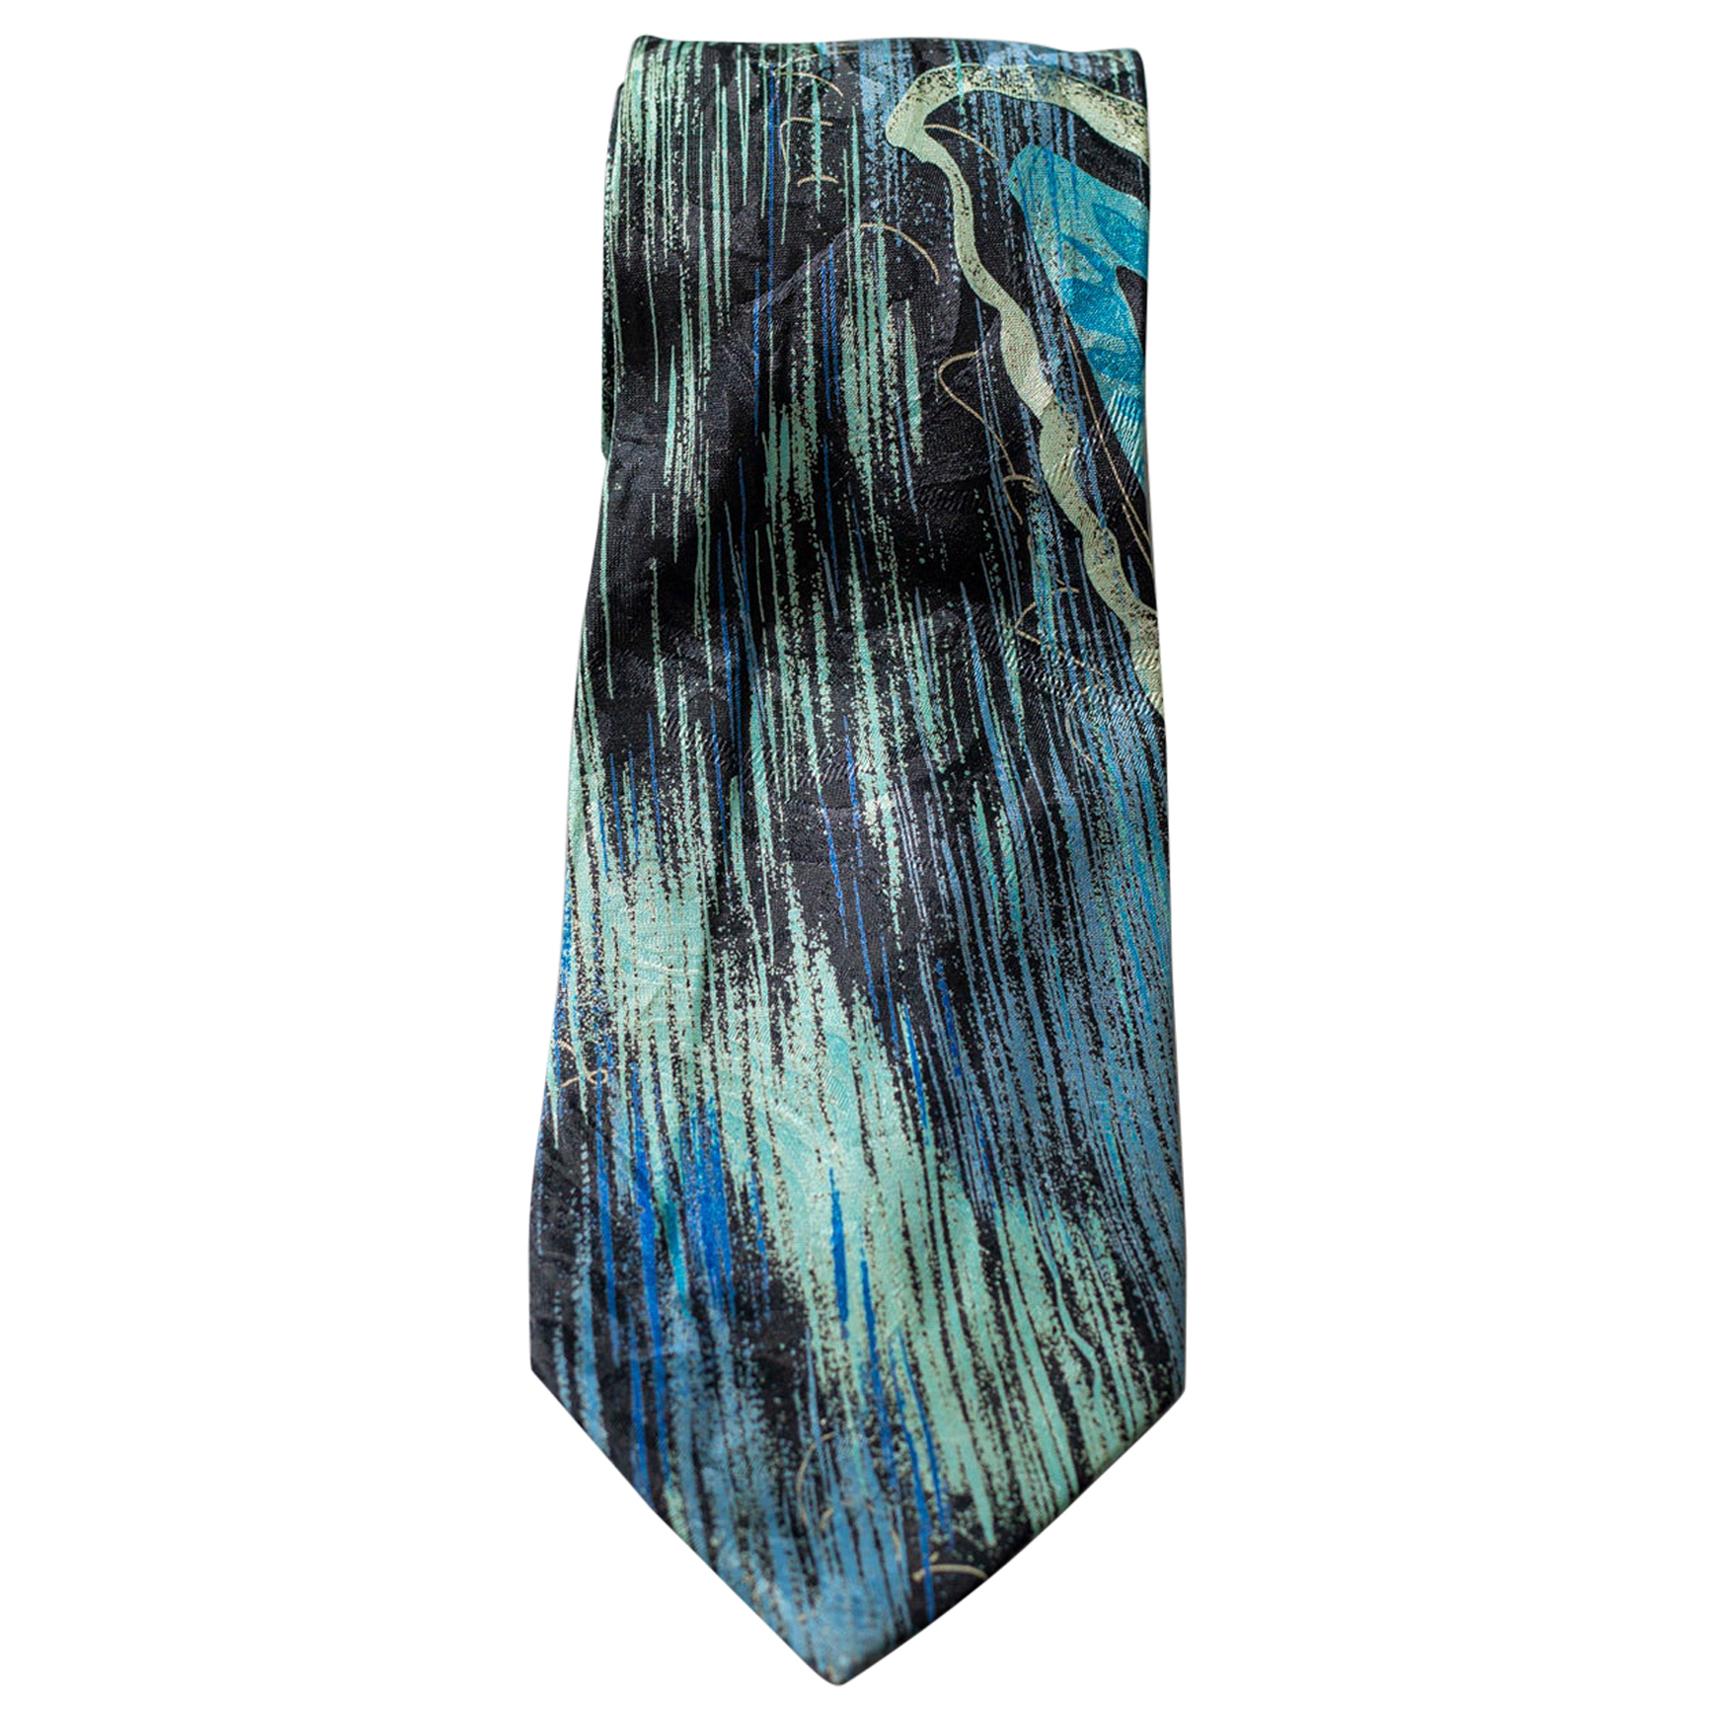 Vintage Cardelli Krawatte aus 100 % Seide in Hellblau, Blau und Aquagrün